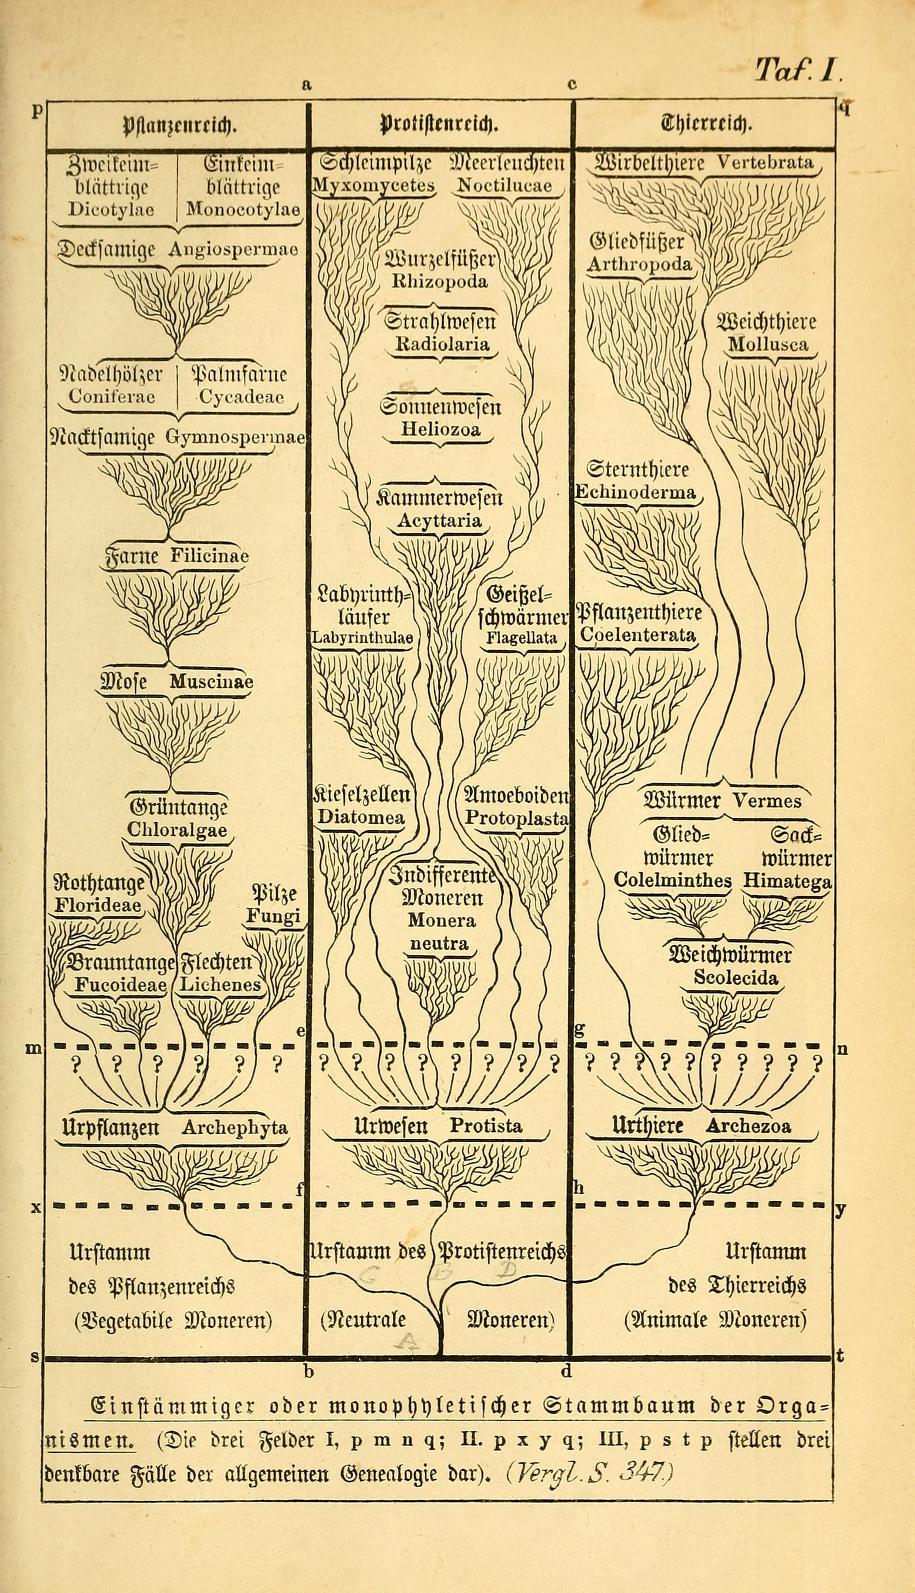 Tree of Animal Evolution